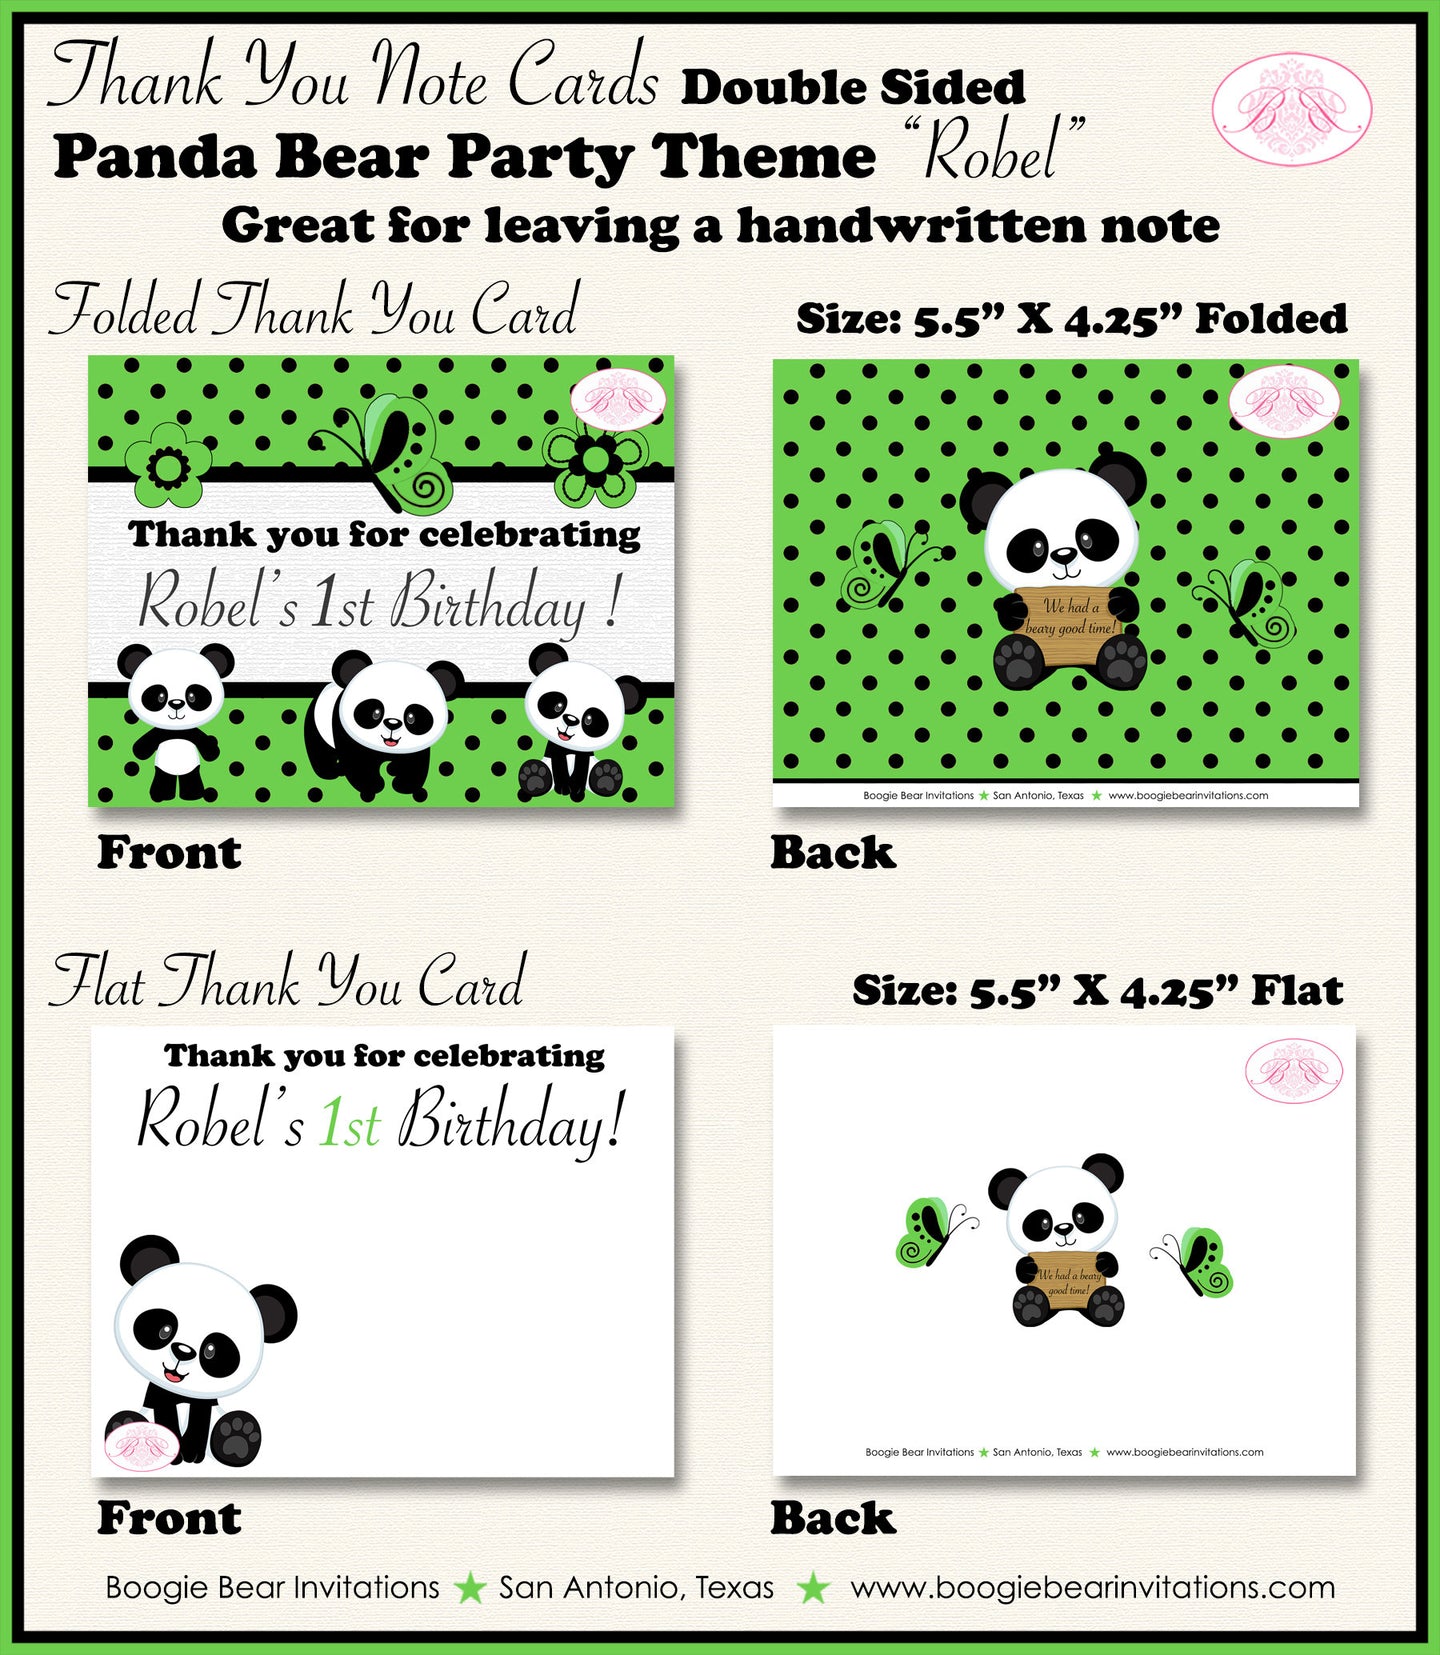 Green Panda Bear Birthday Party Thank You Card Black Little Butterfly Boy Girl Garden Picnic Bug Boogie Bear Invitations Robel Theme Printed